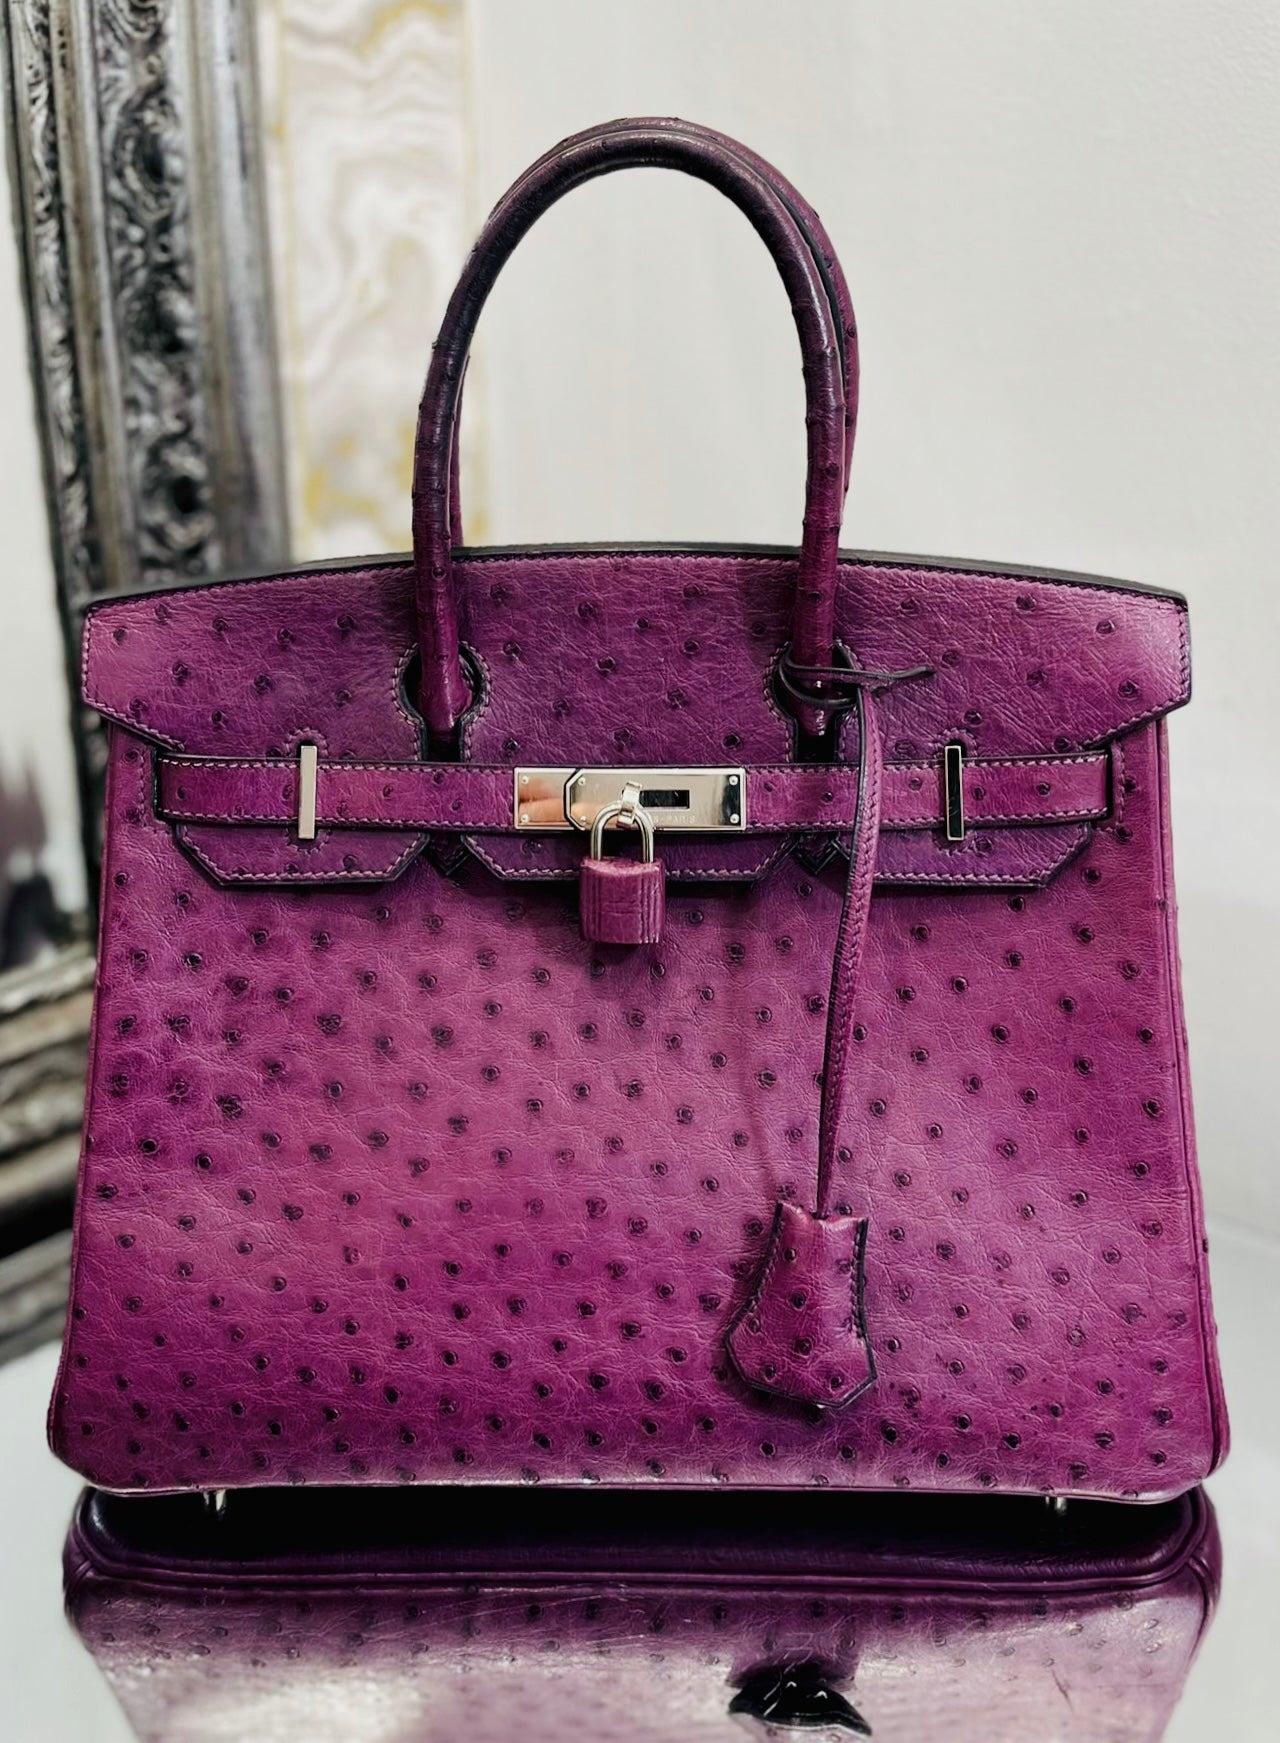 Hermes Birkin 30 Ostrich Skin Handbag 

Violette purple, Birkin bag with palladium hardware.

Top carry handles, flap closure and clochette with padlock

and keys. Leather interior. Date stamp 2010.

Size - Height 22cm , Width 30cm, Depth